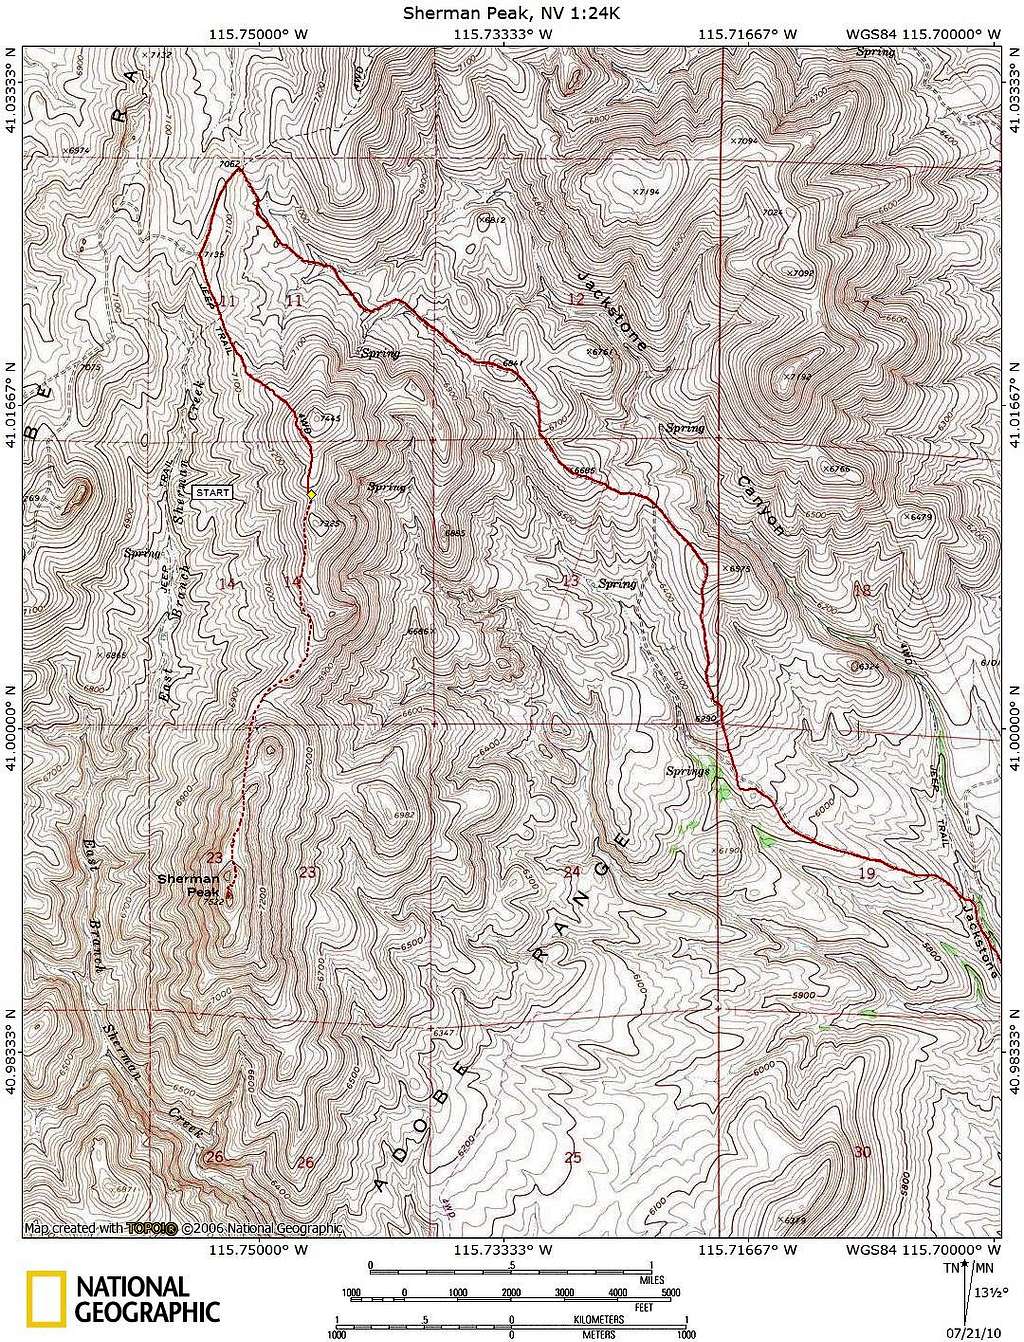 Sherman Peak access route (2/2)